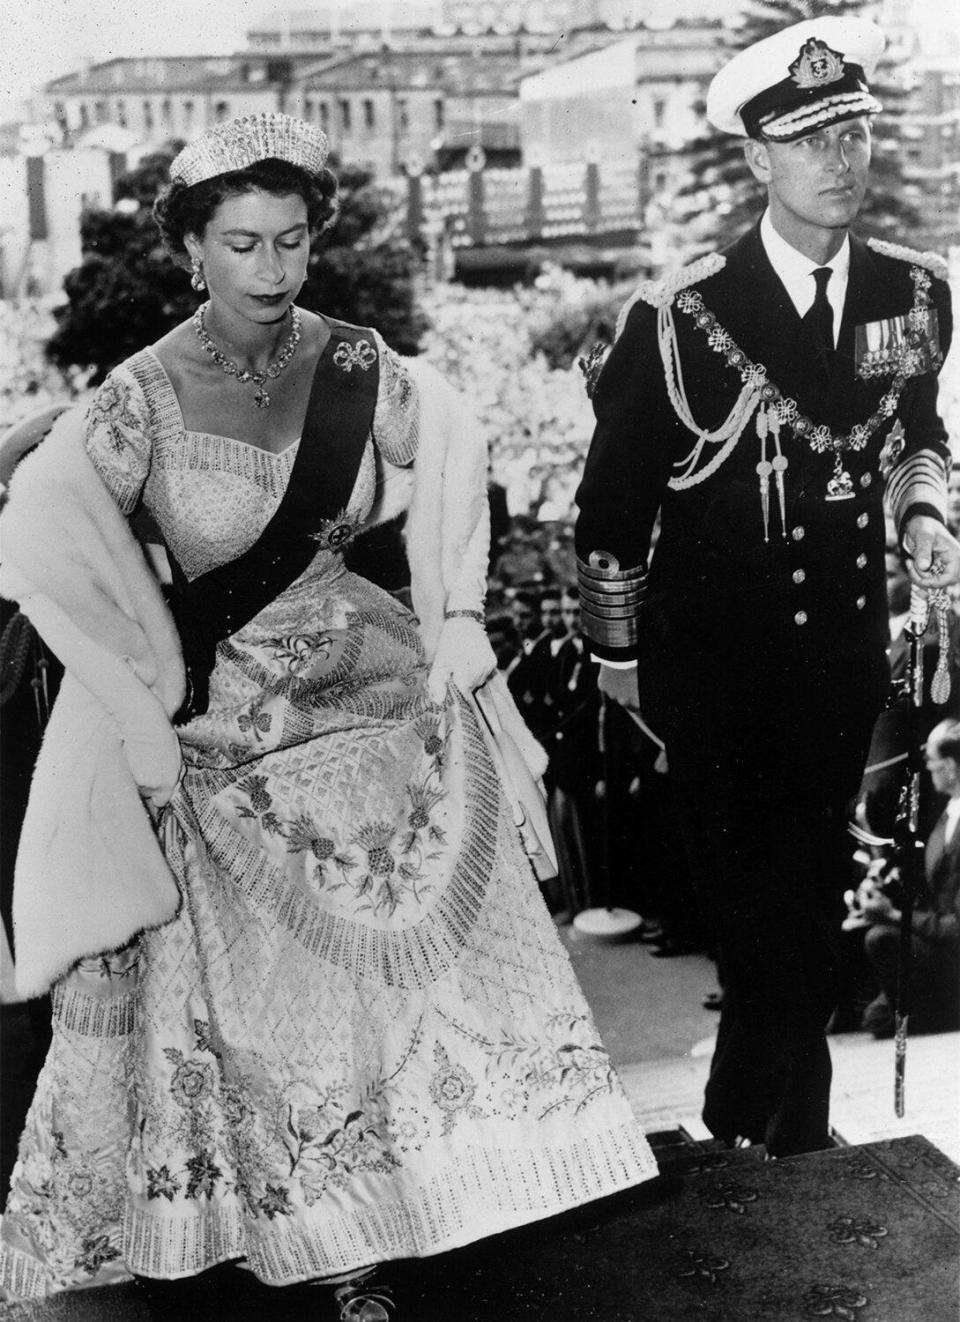 18th January 1954: Queen Elizabeth II, wearing her Coronation dress, arriving with the Duke of Edinburgh to open Parliament in Wellington, New Zealand.